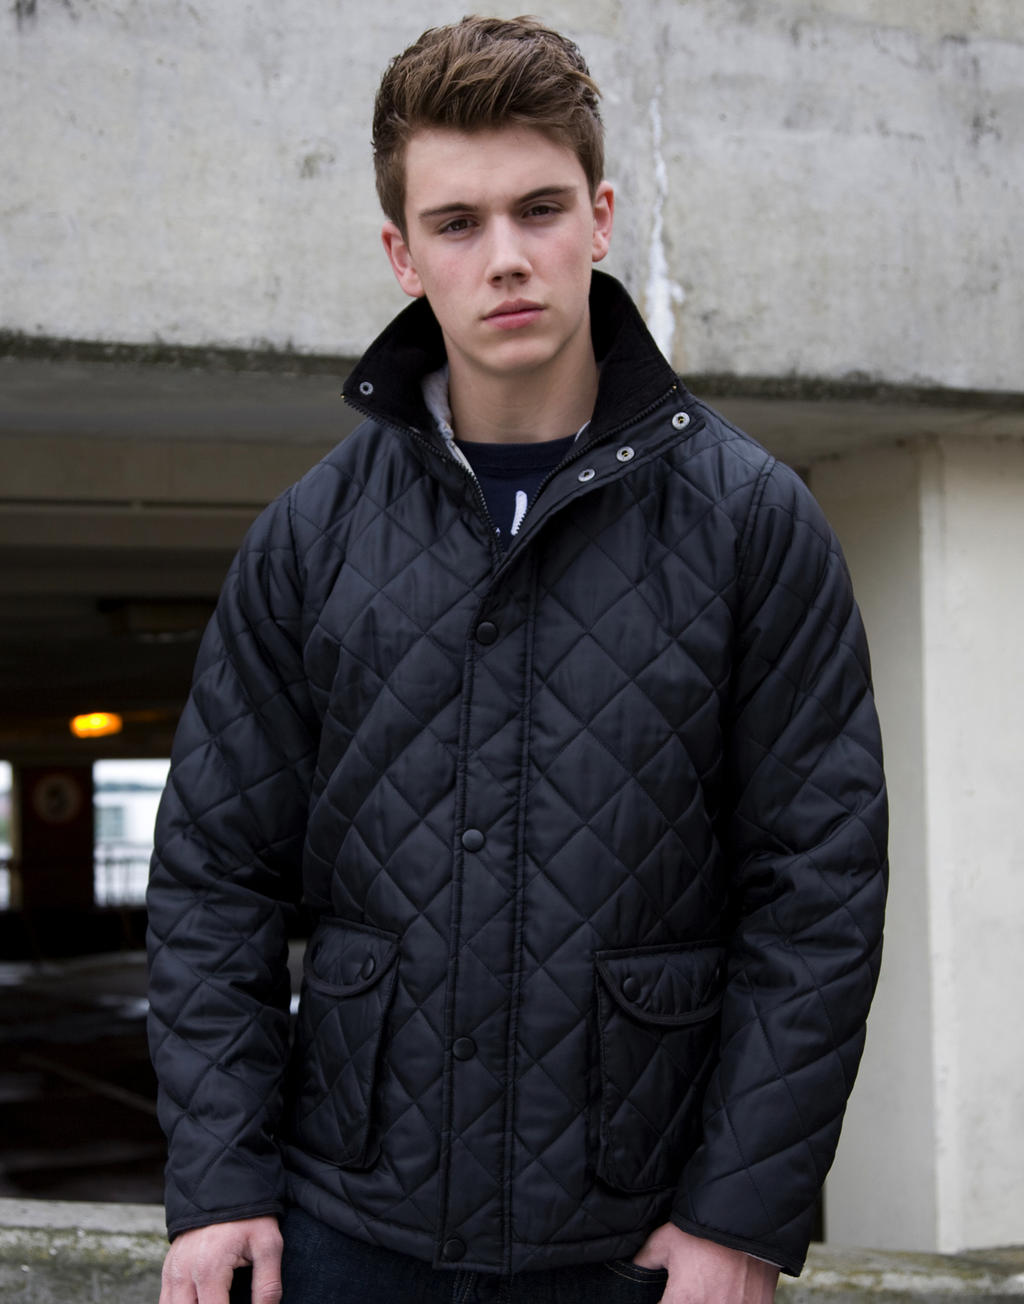  Urban Cheltenham Jacket in Farbe Black